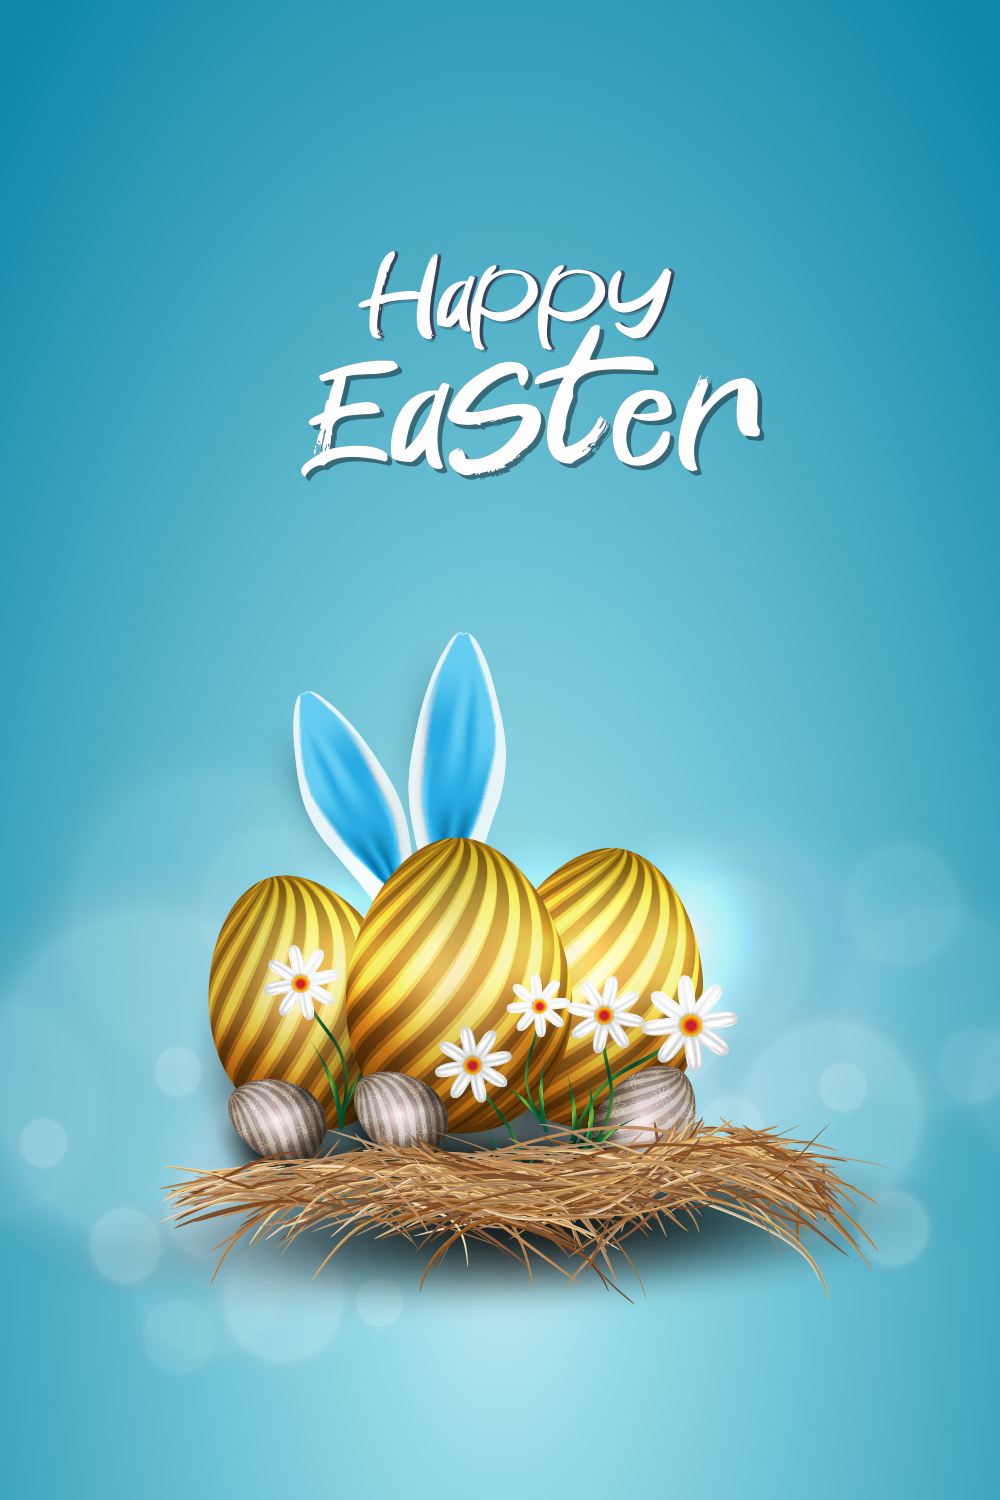 Happy Easter Illustration Pinterest Image.